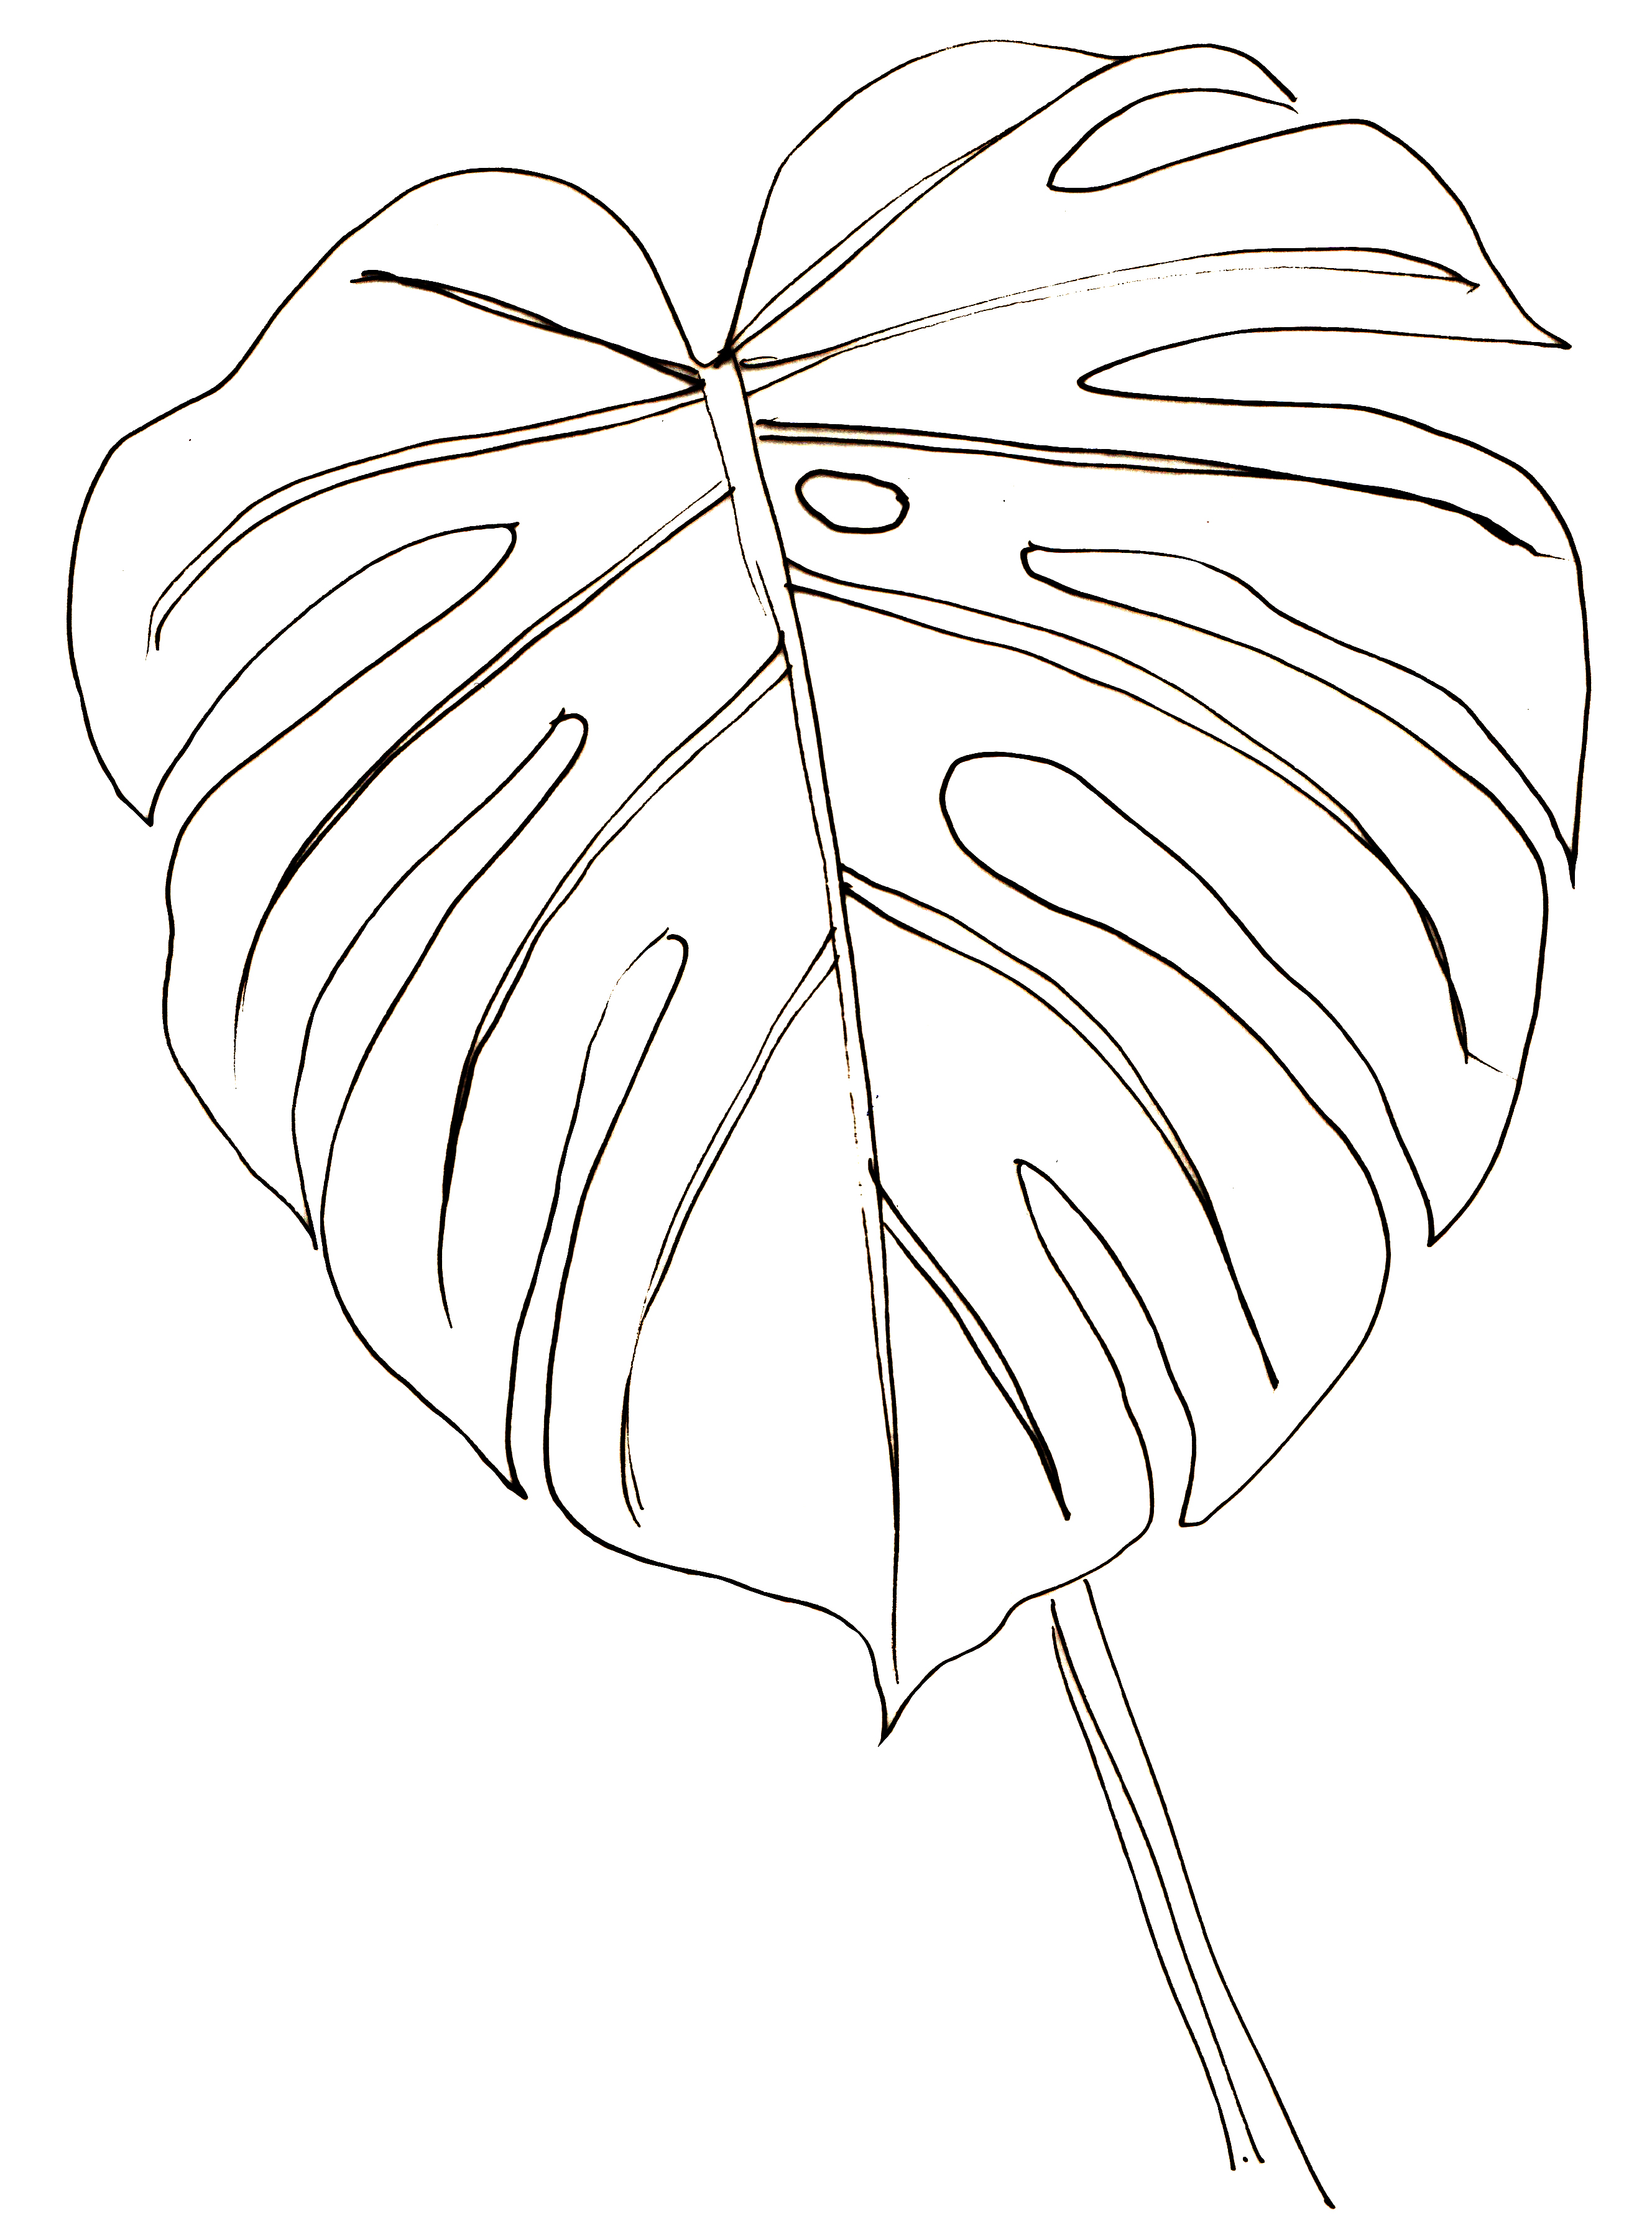 Eucalyptus Leaf Drawing at GetDrawings | Free download